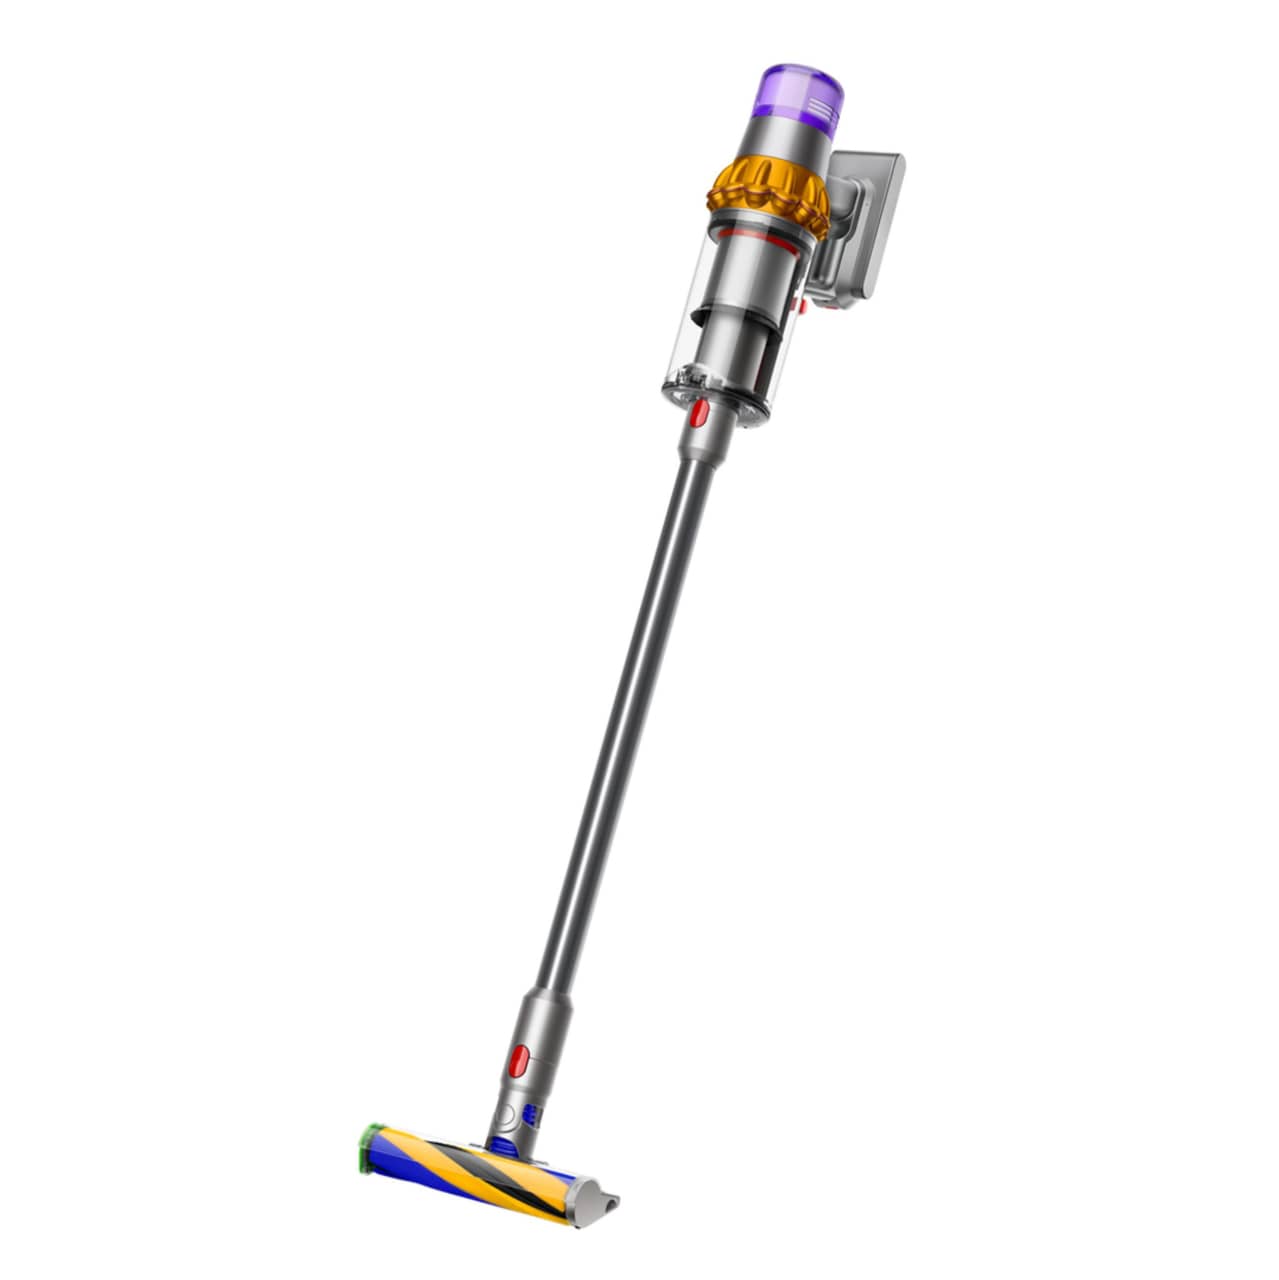 V15 Detect Cordless Vacuum Cleaner